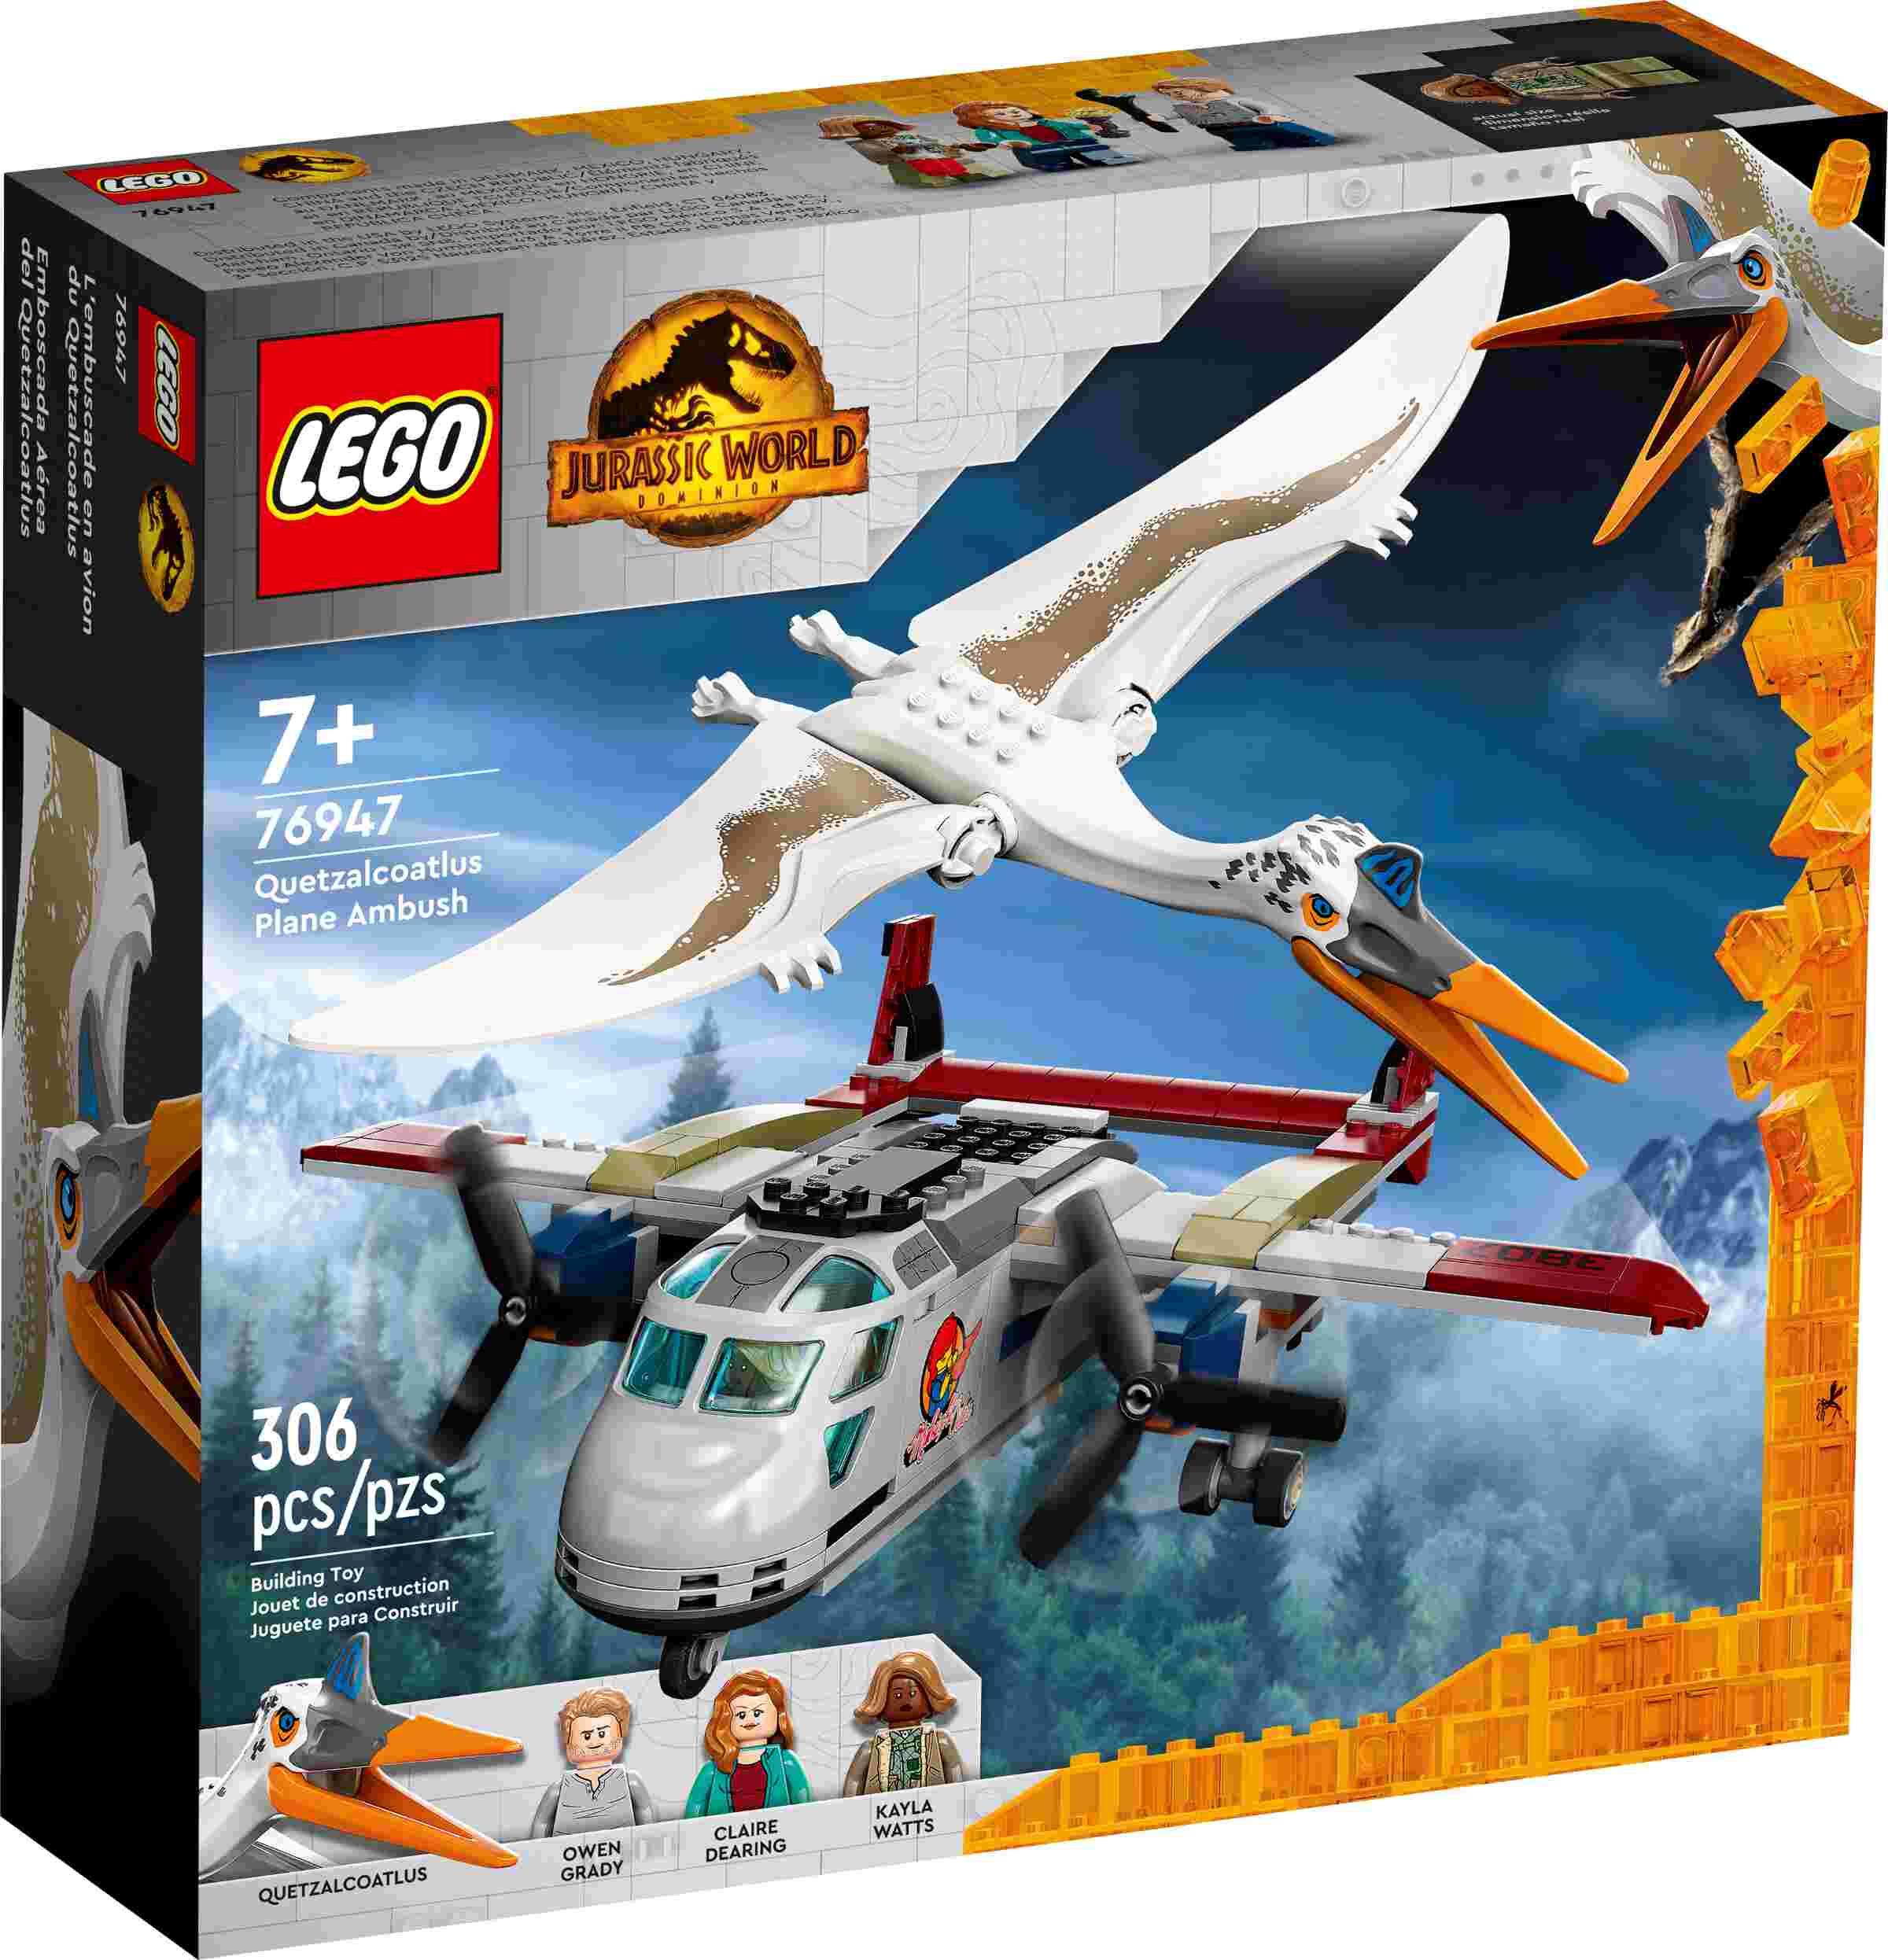 TBD - LEGO 76947 Jurassic World-4-2022 Quetzalcoatlus: Flugzeug-Überfall